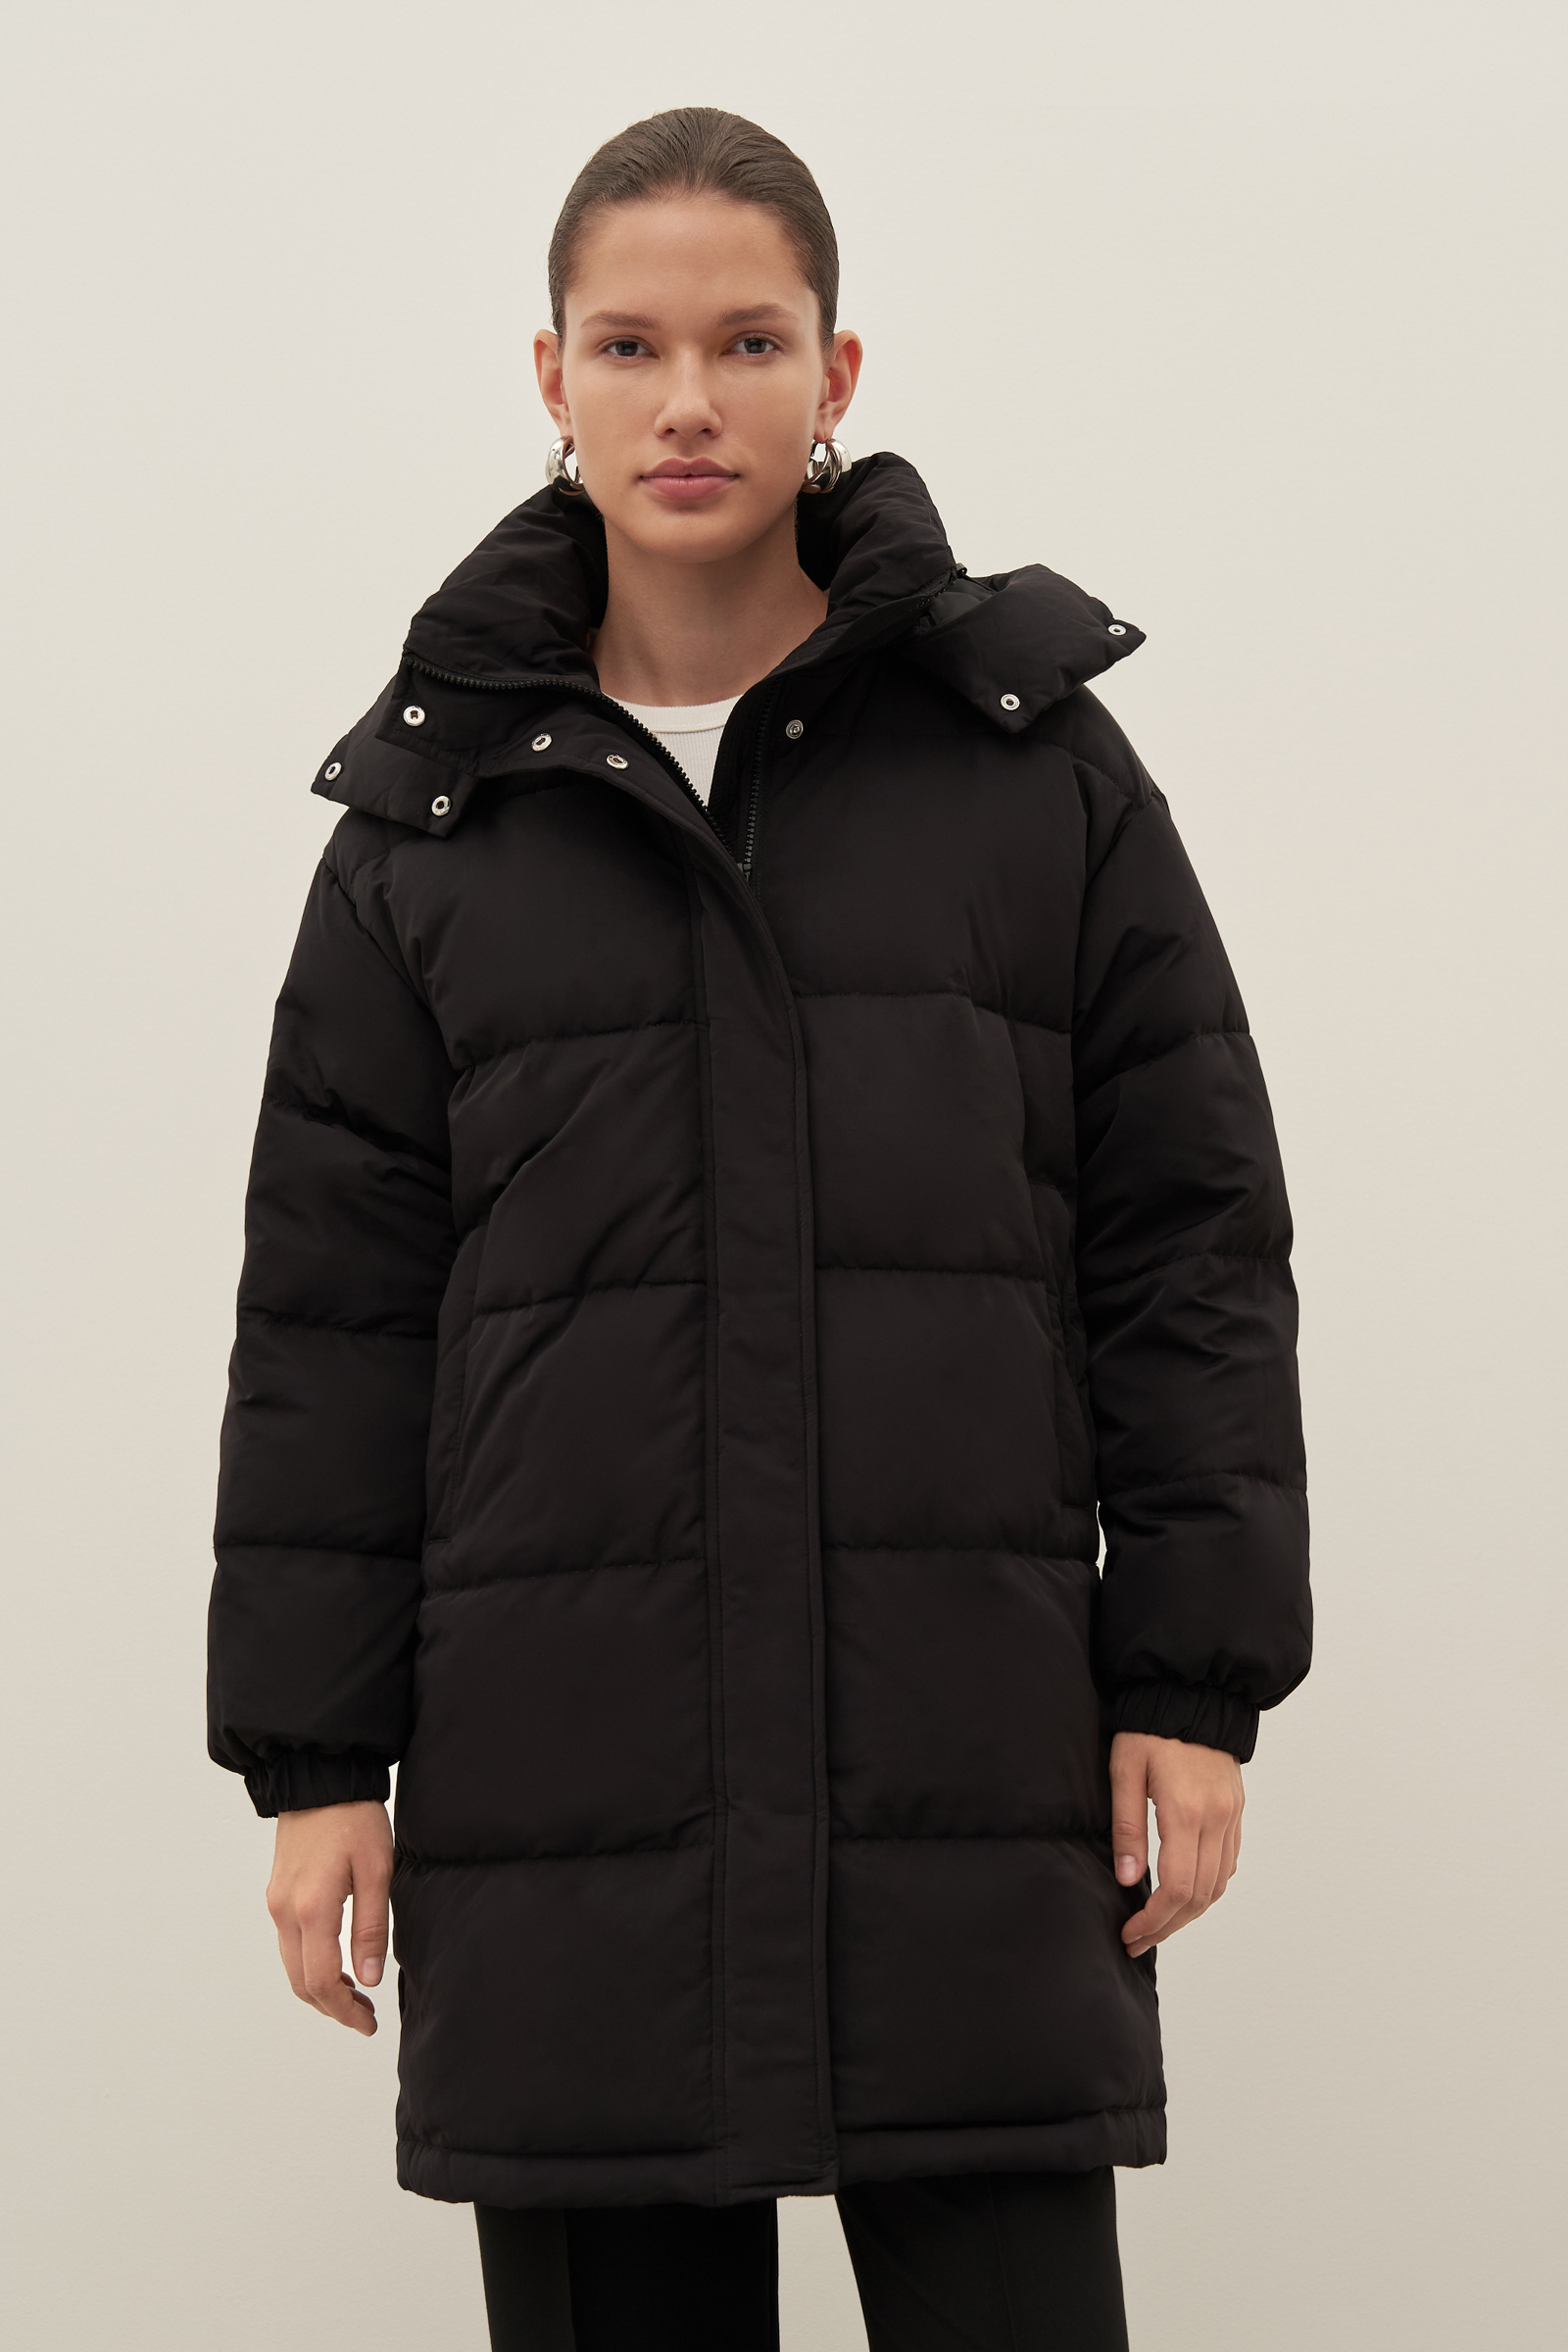 Пуховик-пальто женский Finn Flare FAD11016 черный XL